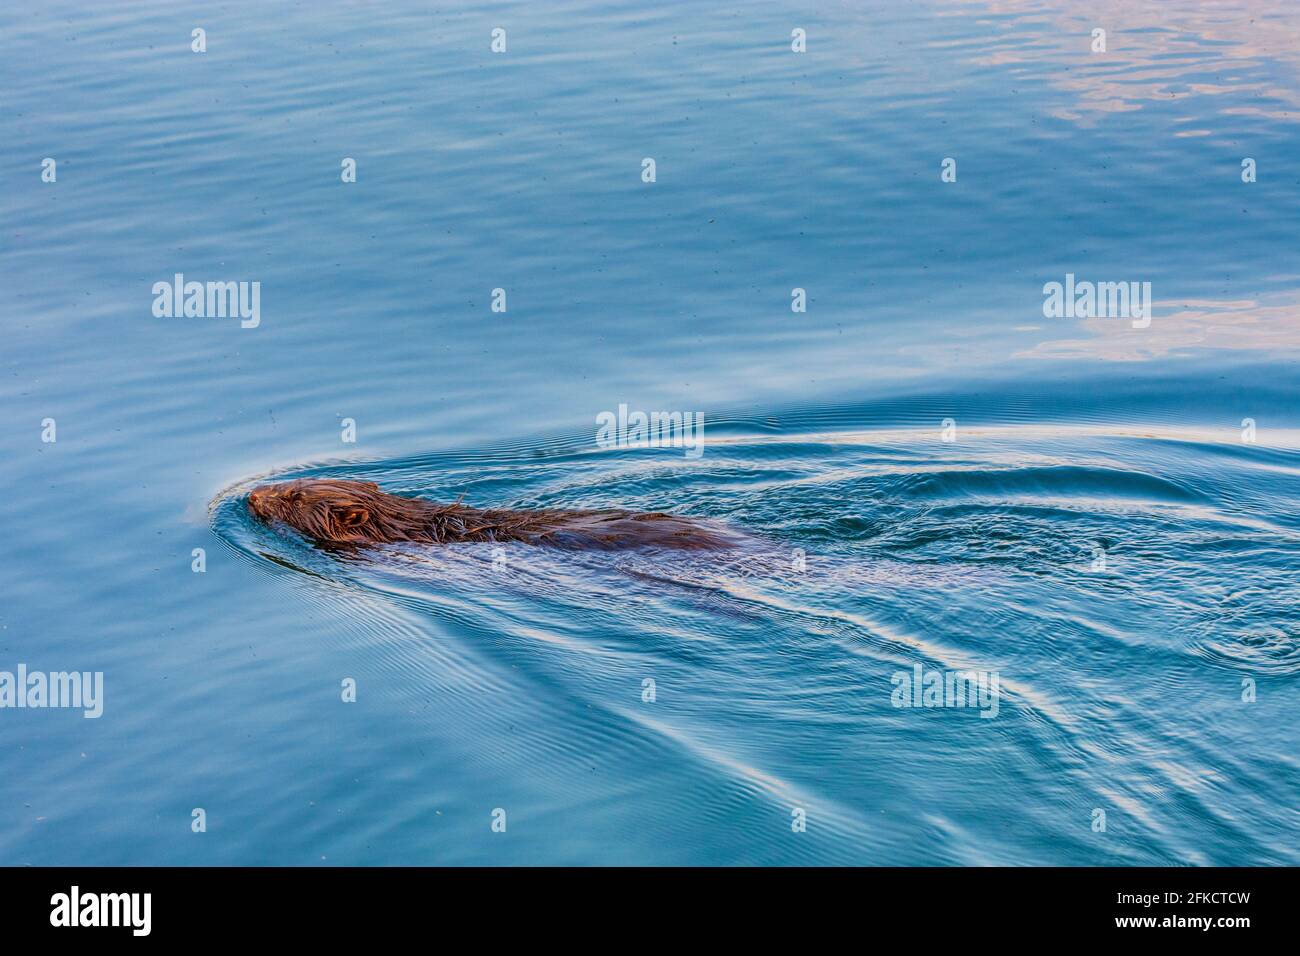 Wien, Vienna: Eurasian beaver or European beaver (Castor fiber) swimming in river Neue Donau (New Danube) in 22. Donaustadt, Wien, Austria Stock Photo